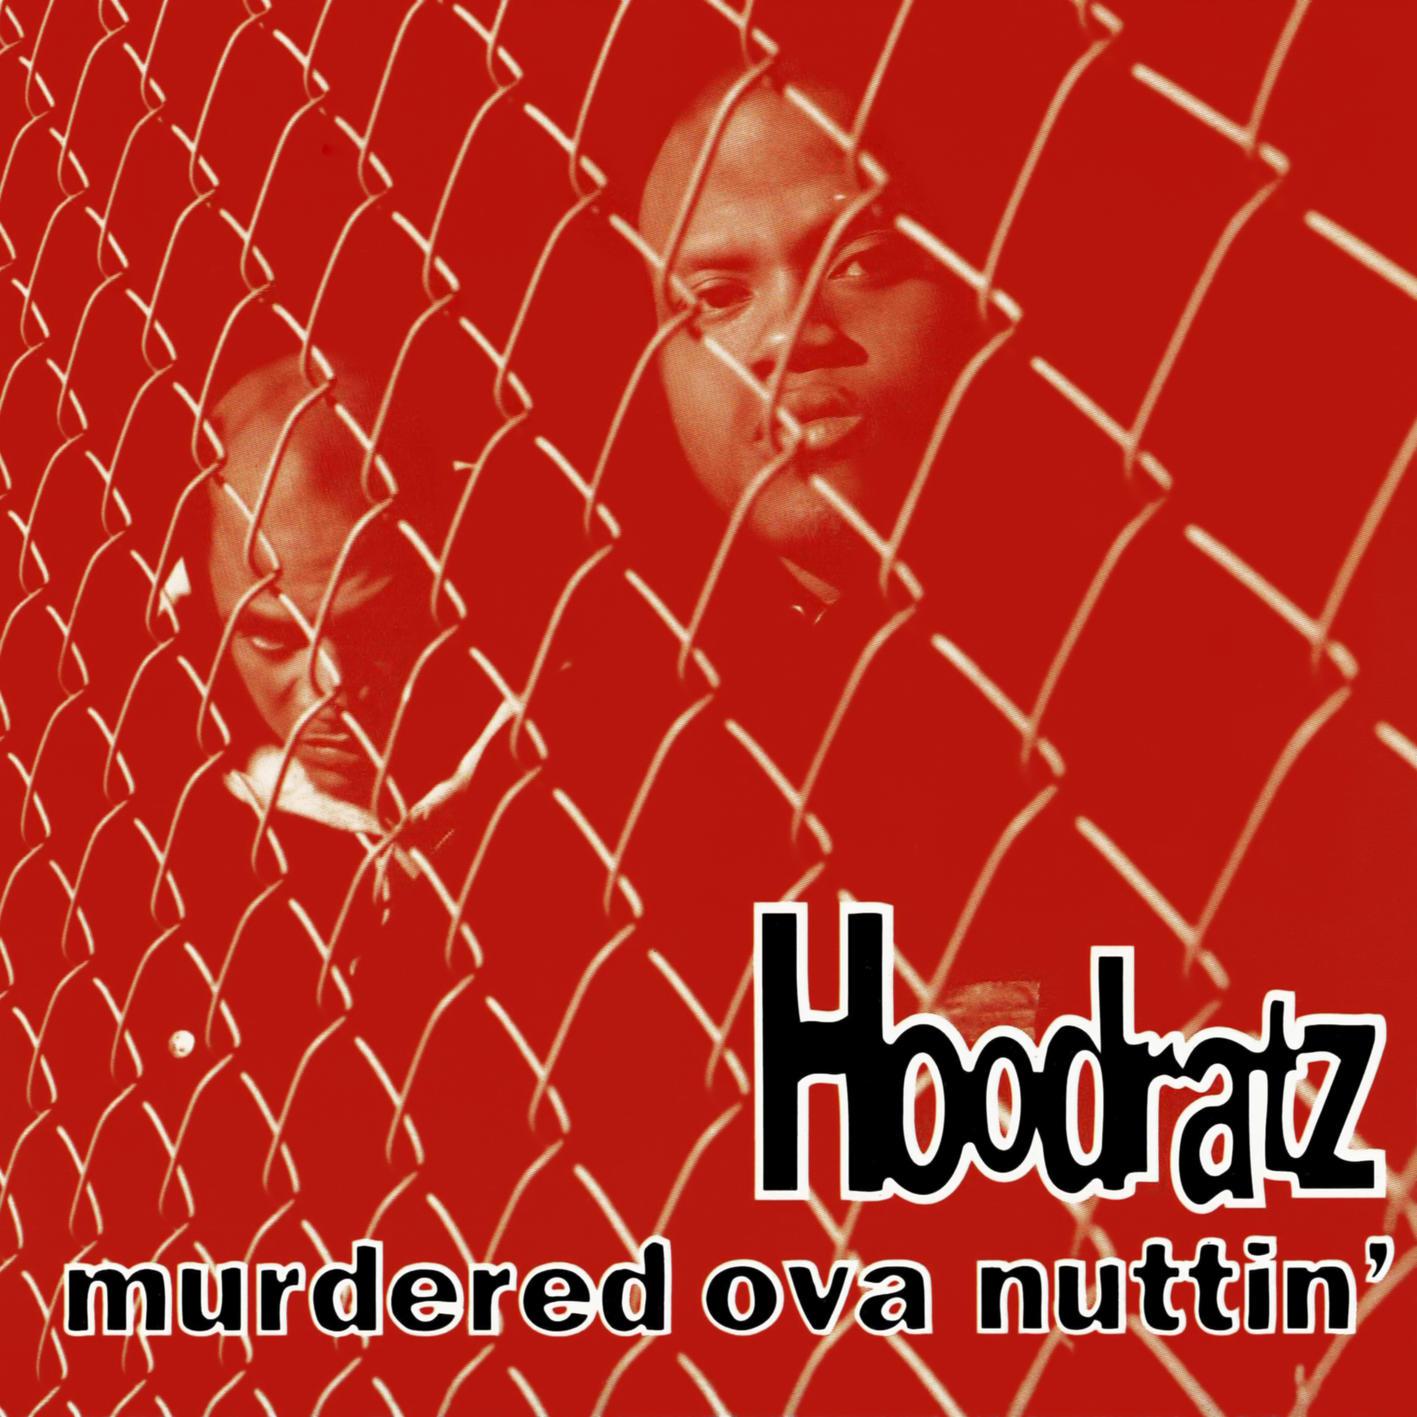 Hoodratz - Murdered Ova Nuttin' (The Sneeke Remix)